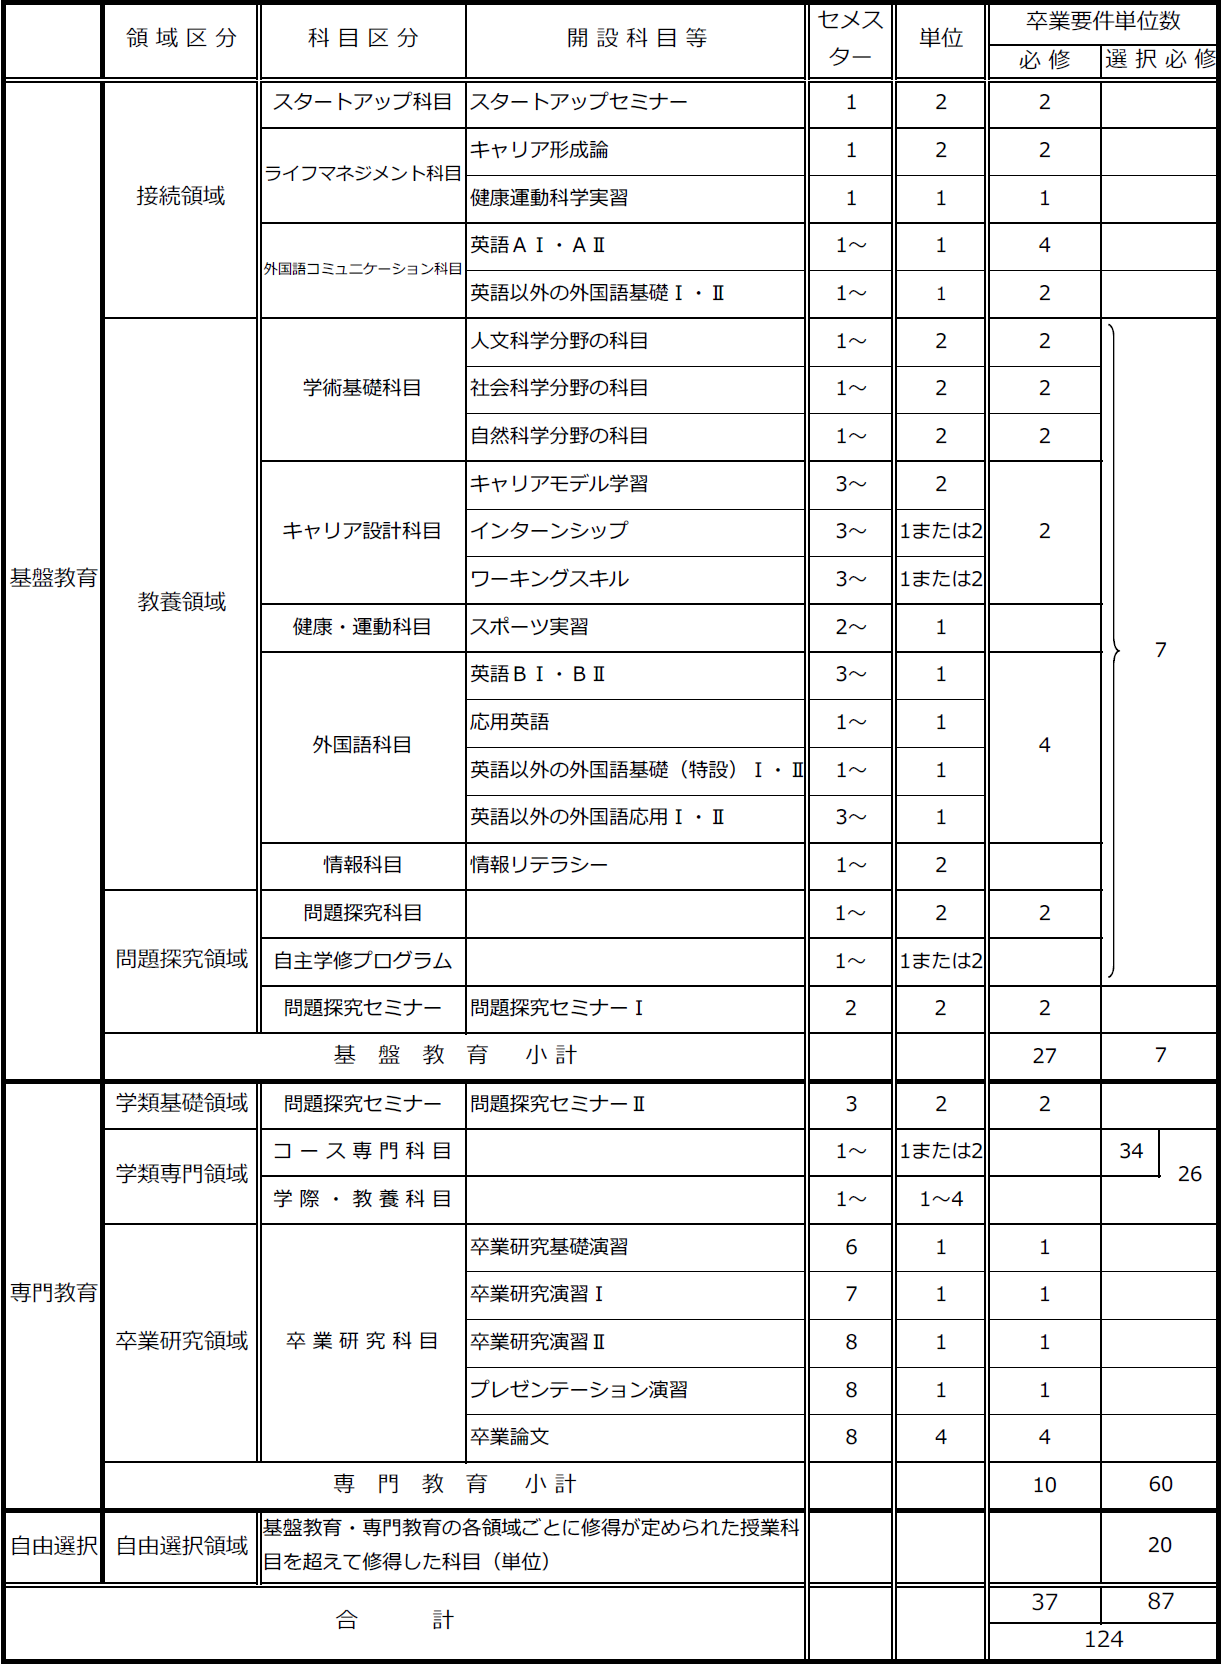 http://kyoumu.adb.fukushima-u.ac.jp/guide/2020/hdc/Files/2020/03/%E5%B1%A5%E4%BF%AE%E5%9F%BA%E6%BA%96%E8%A1%A8200331%282%29.png